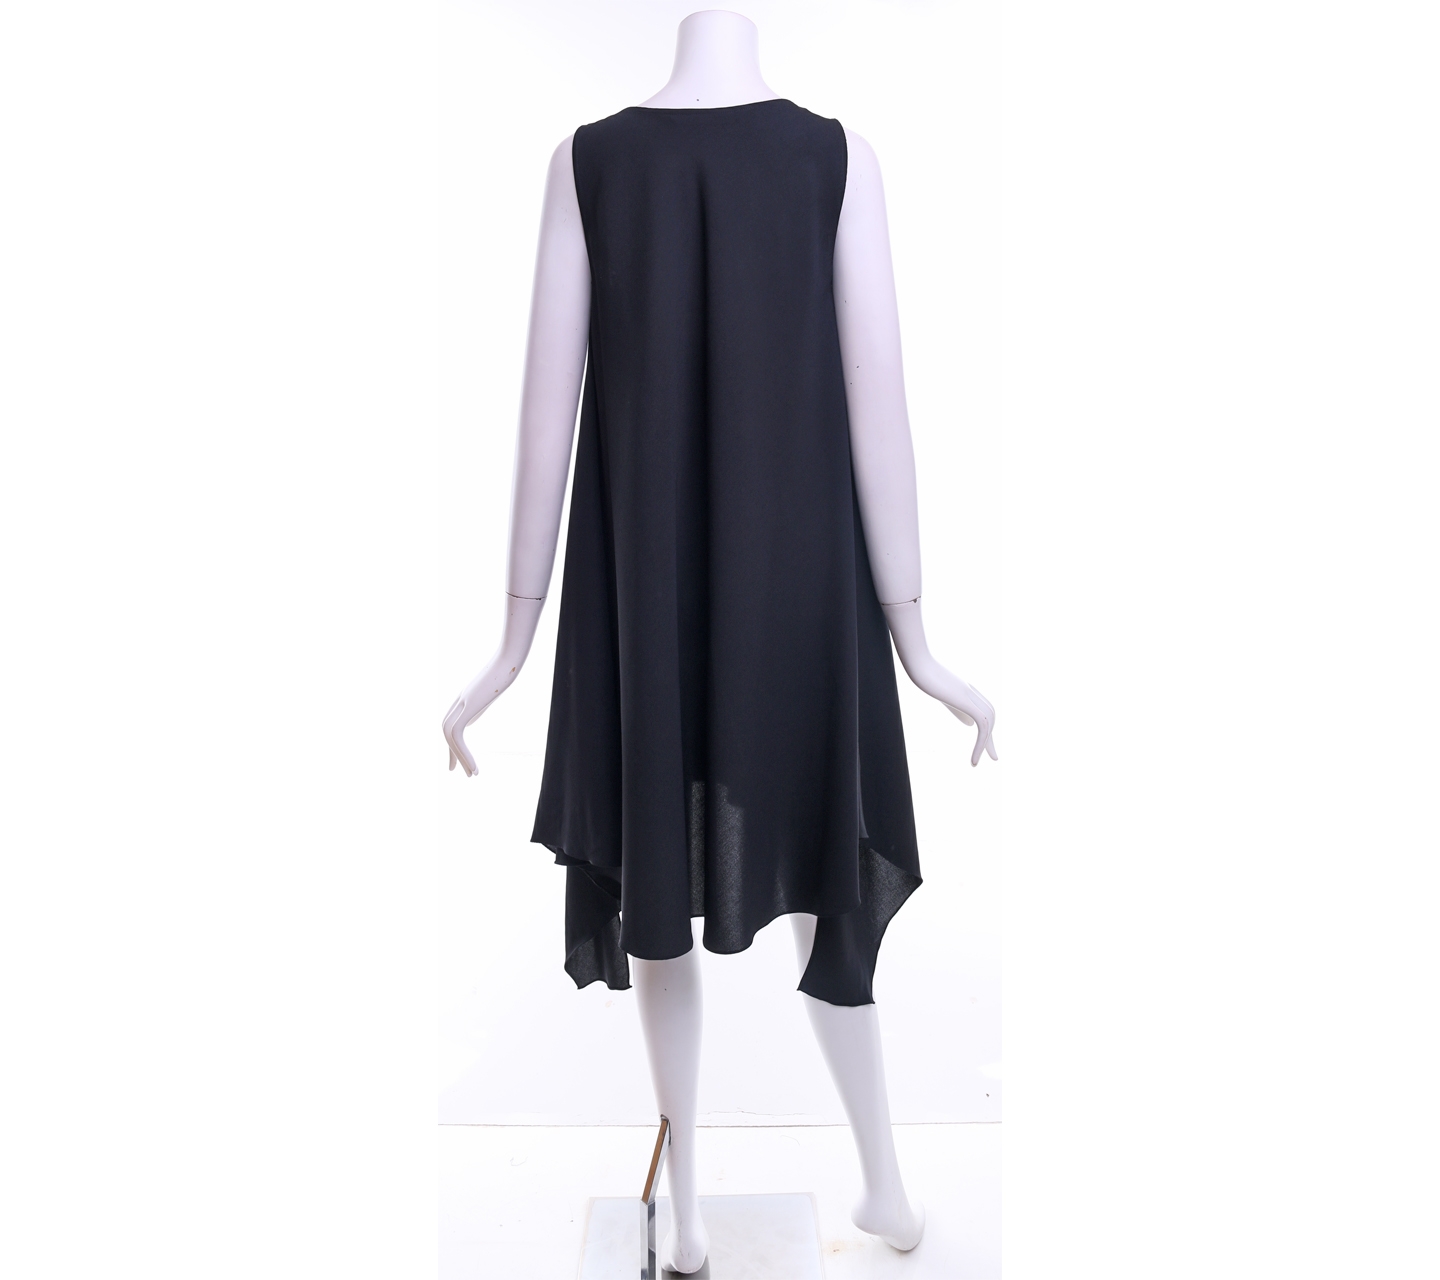 Shop At Shopee Black Asymmetrical Mini Dress